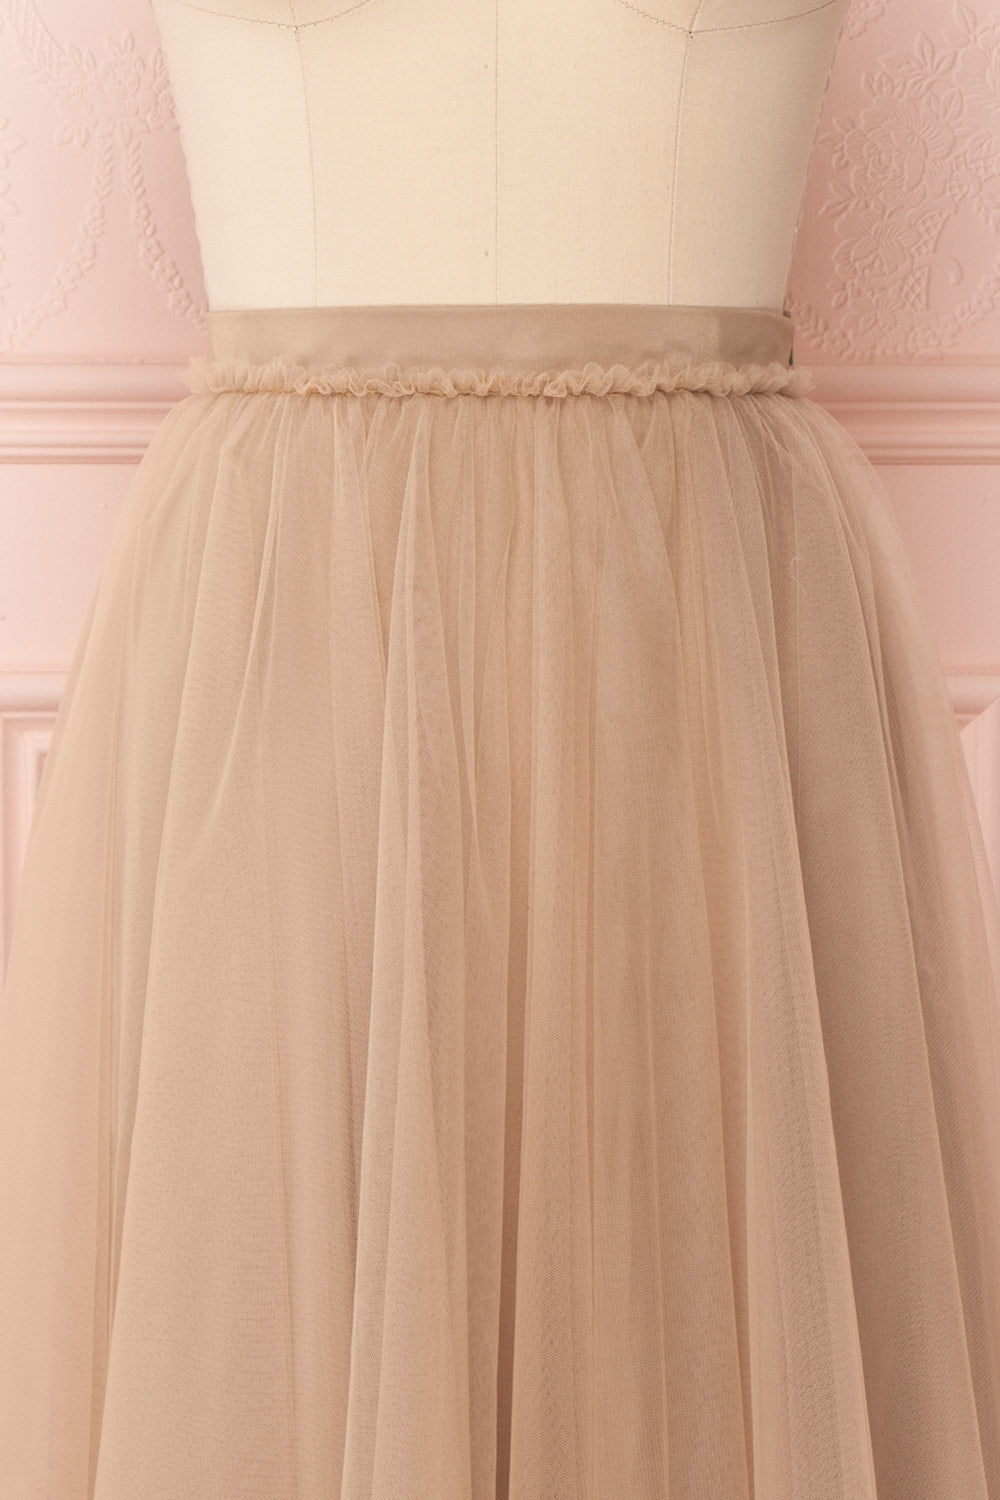 Othilie Beige Tulle A-Line Skirt | Boutique 1861 2